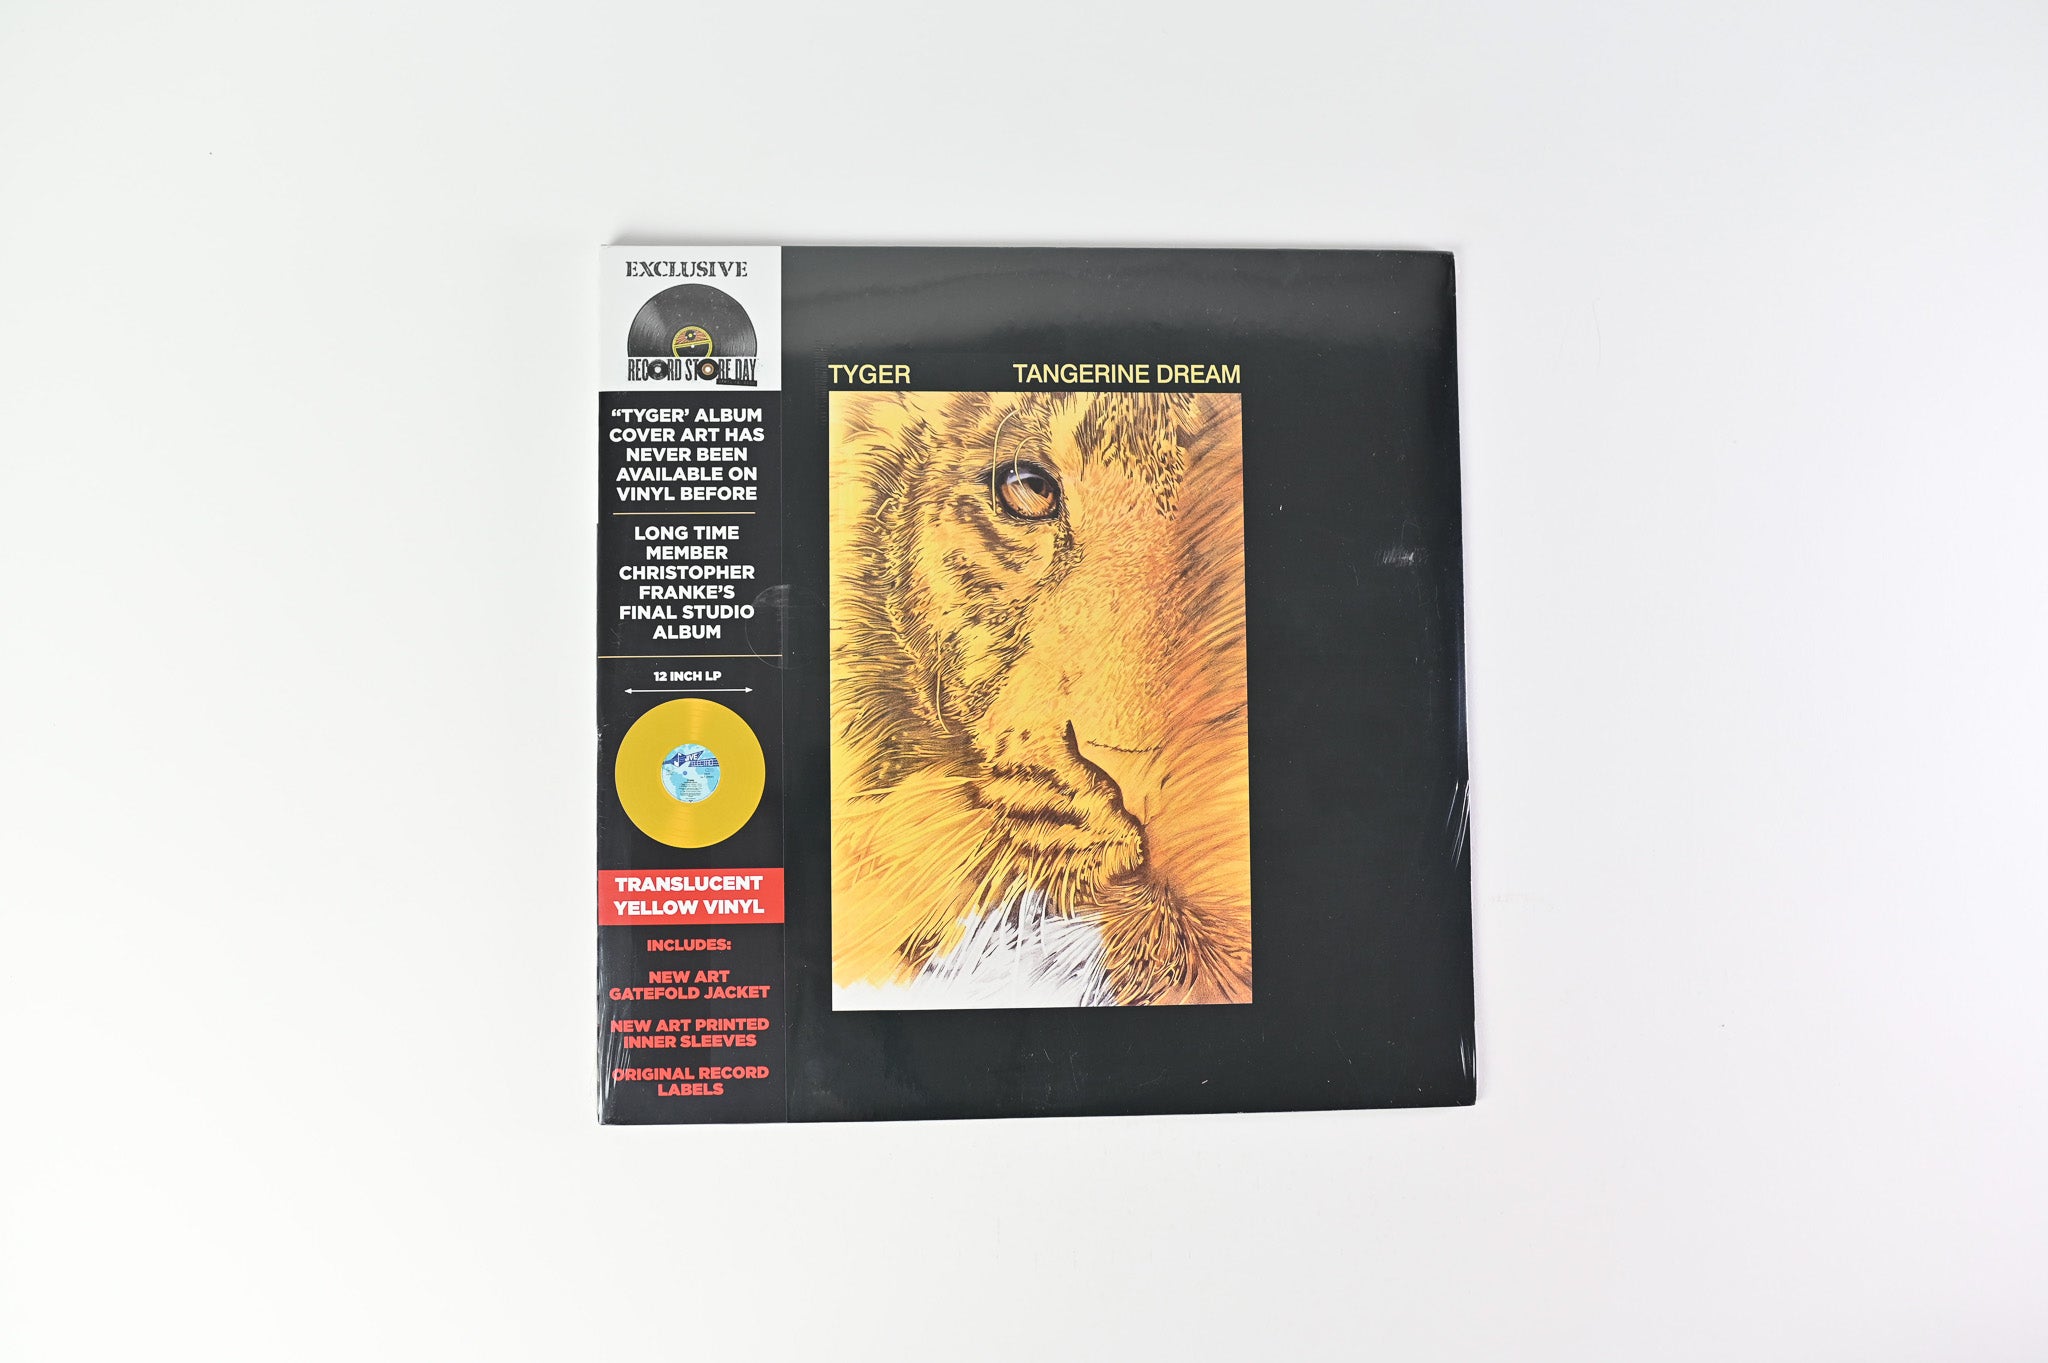 Tangerine Dream - Tyger on Culture Factory USA RSD Reissue on Translucent Yellow Vinyl Sealed